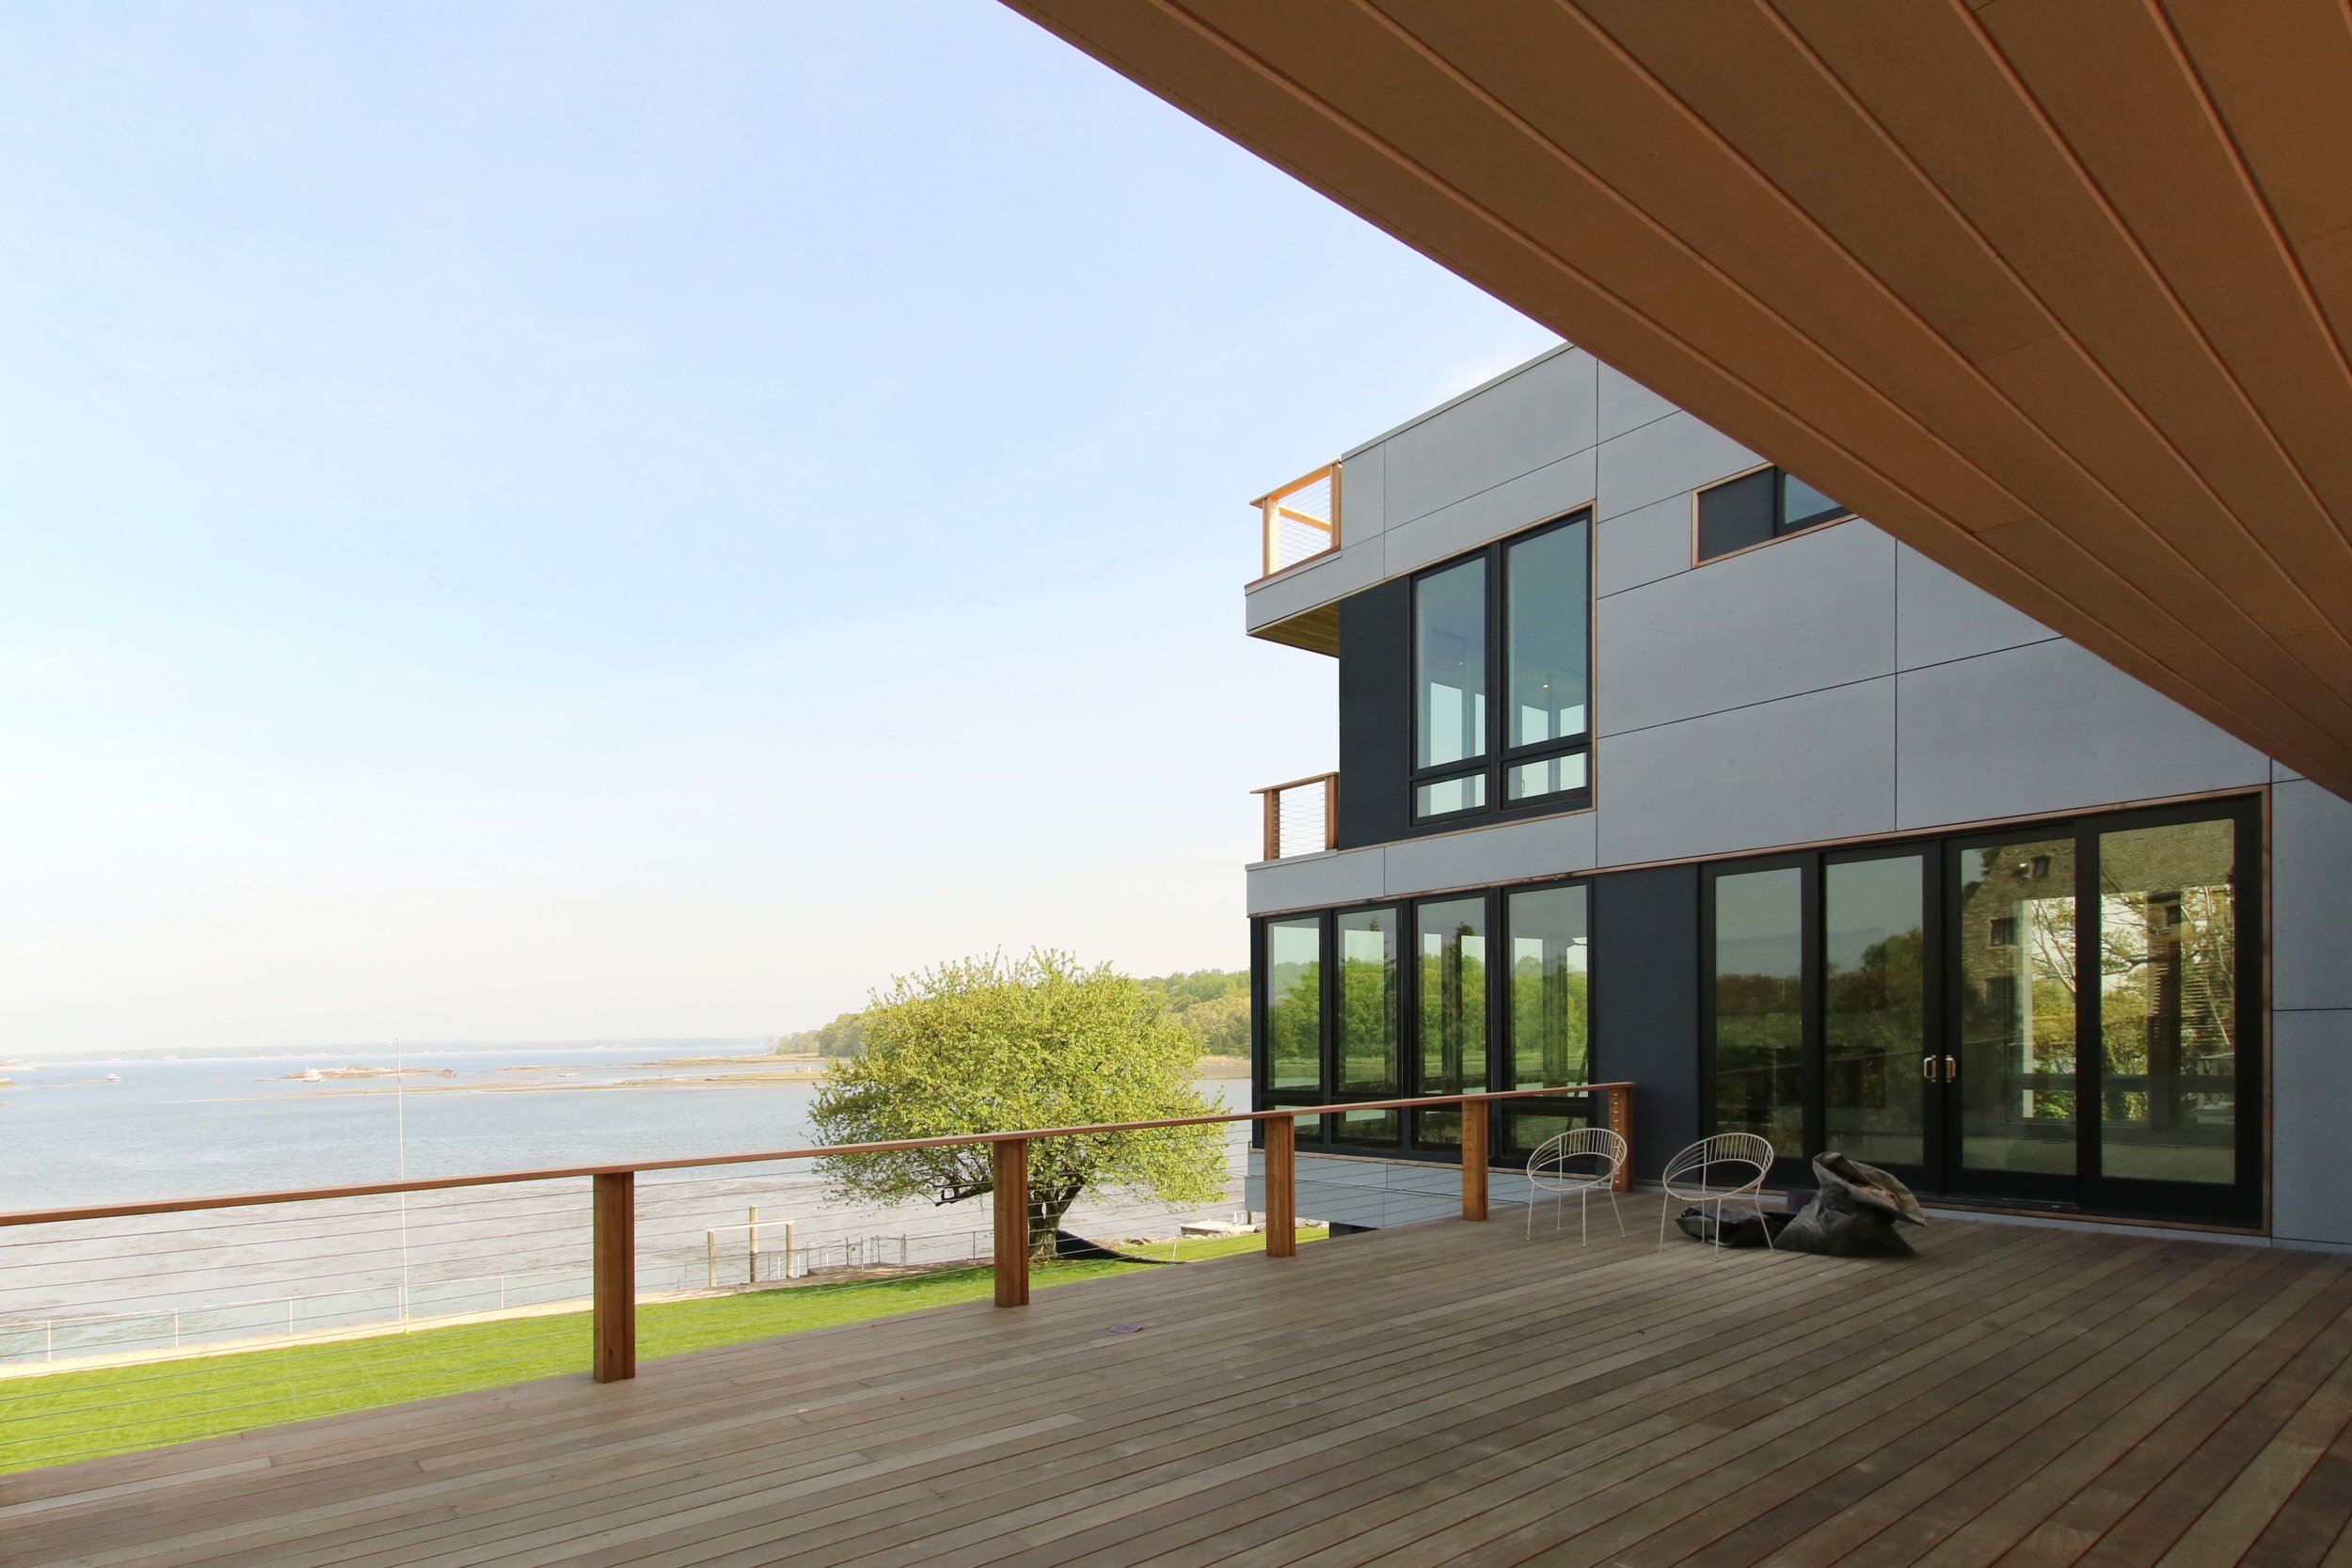 06_res4-resolution-4-architecture-modern-modular-prefab-pelham-bay-house-exterior-covered-deck.jpg